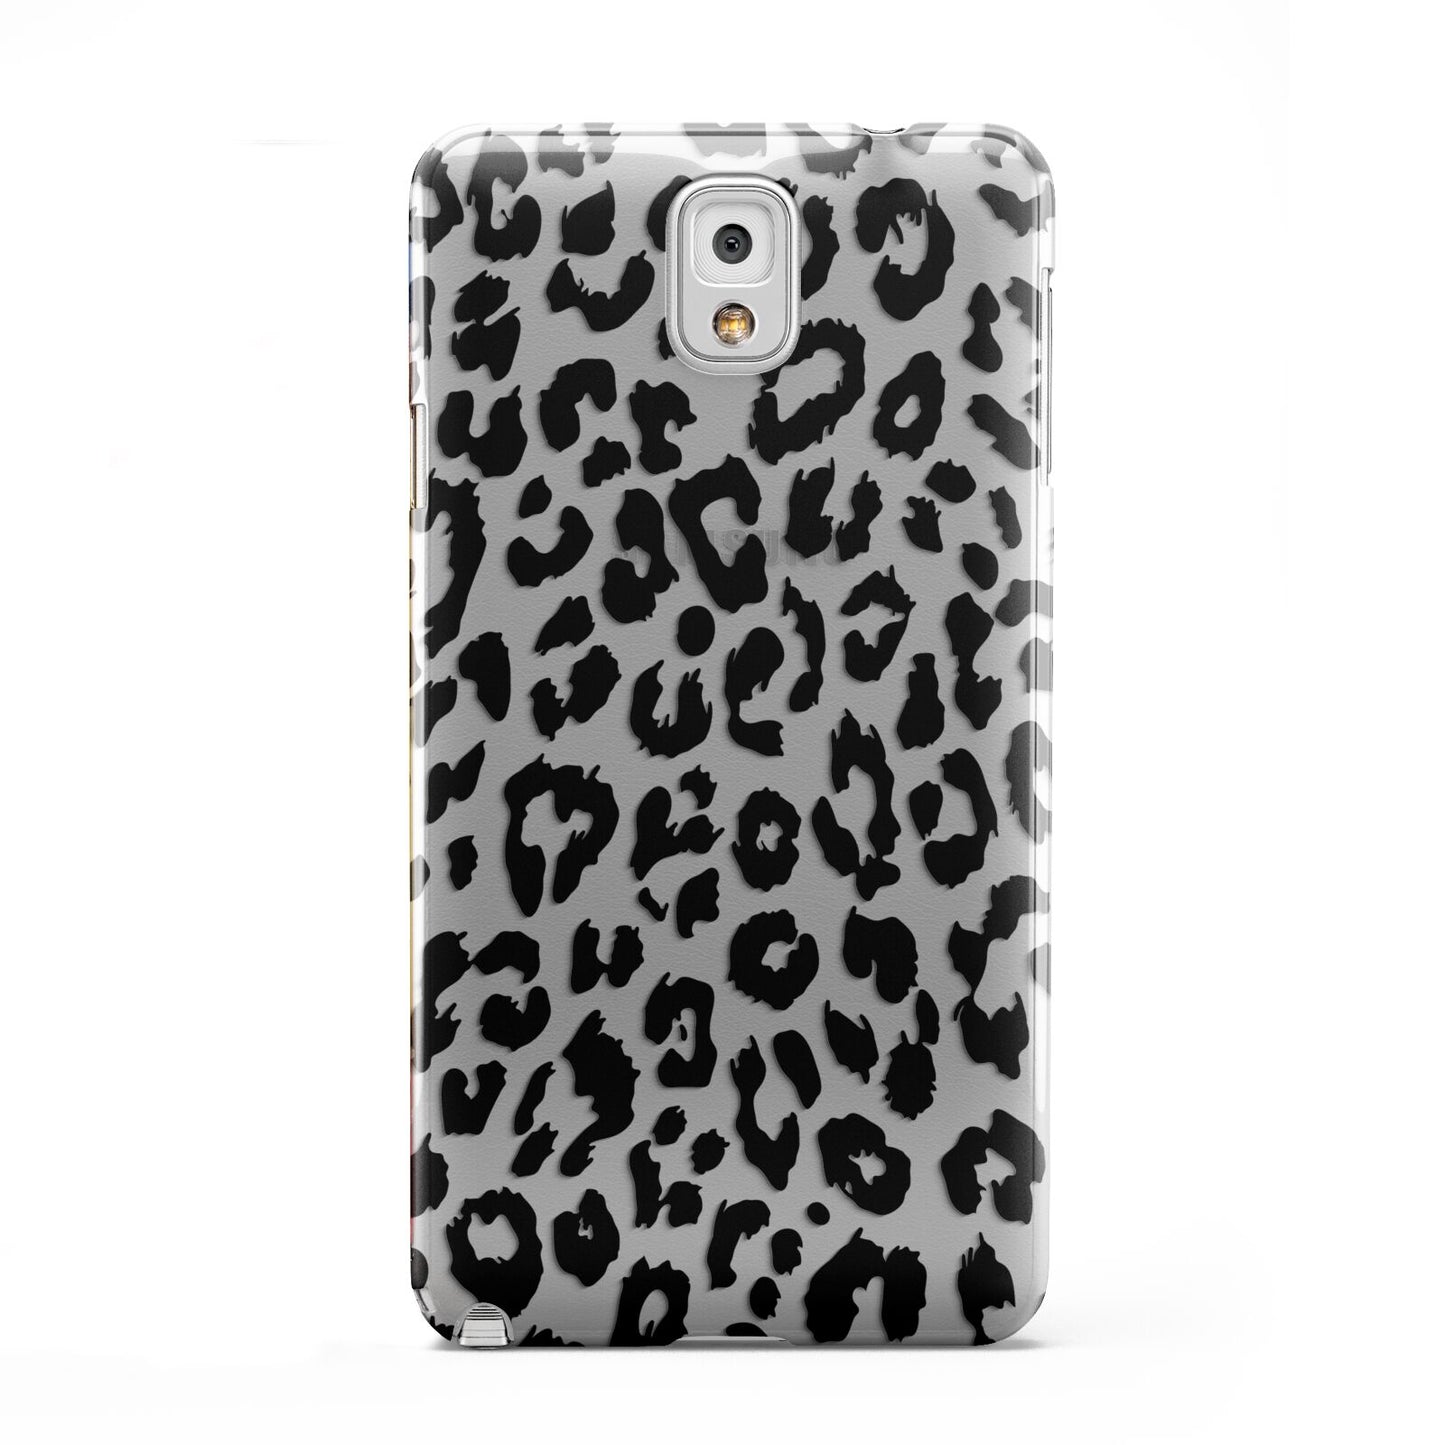 Black Leopard Print Samsung Galaxy Note 3 Case